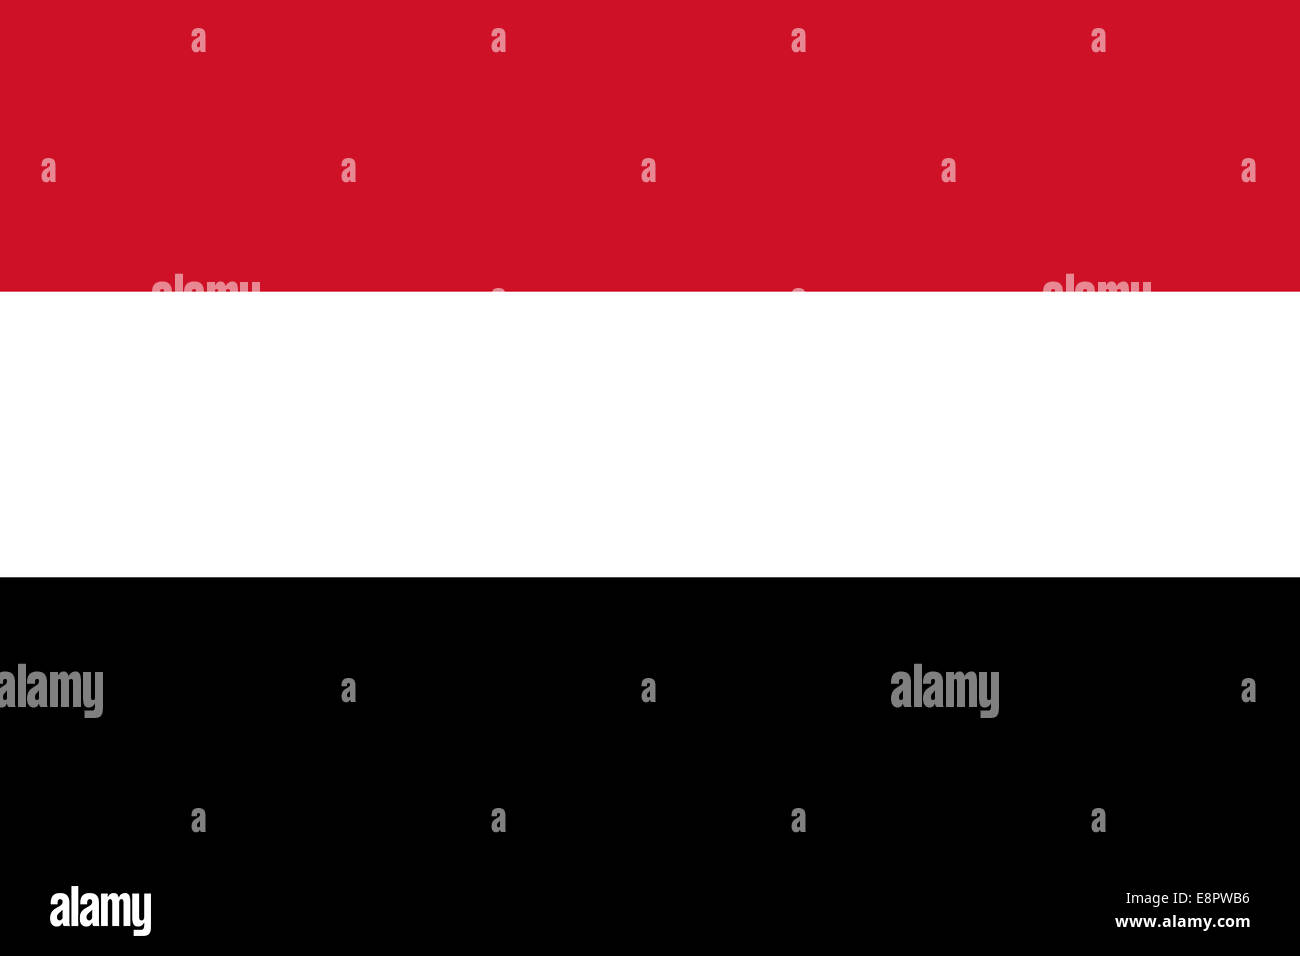 Flag of Yemen - Yemenite Flag standard ratio - true RGB color mode Stock Photo